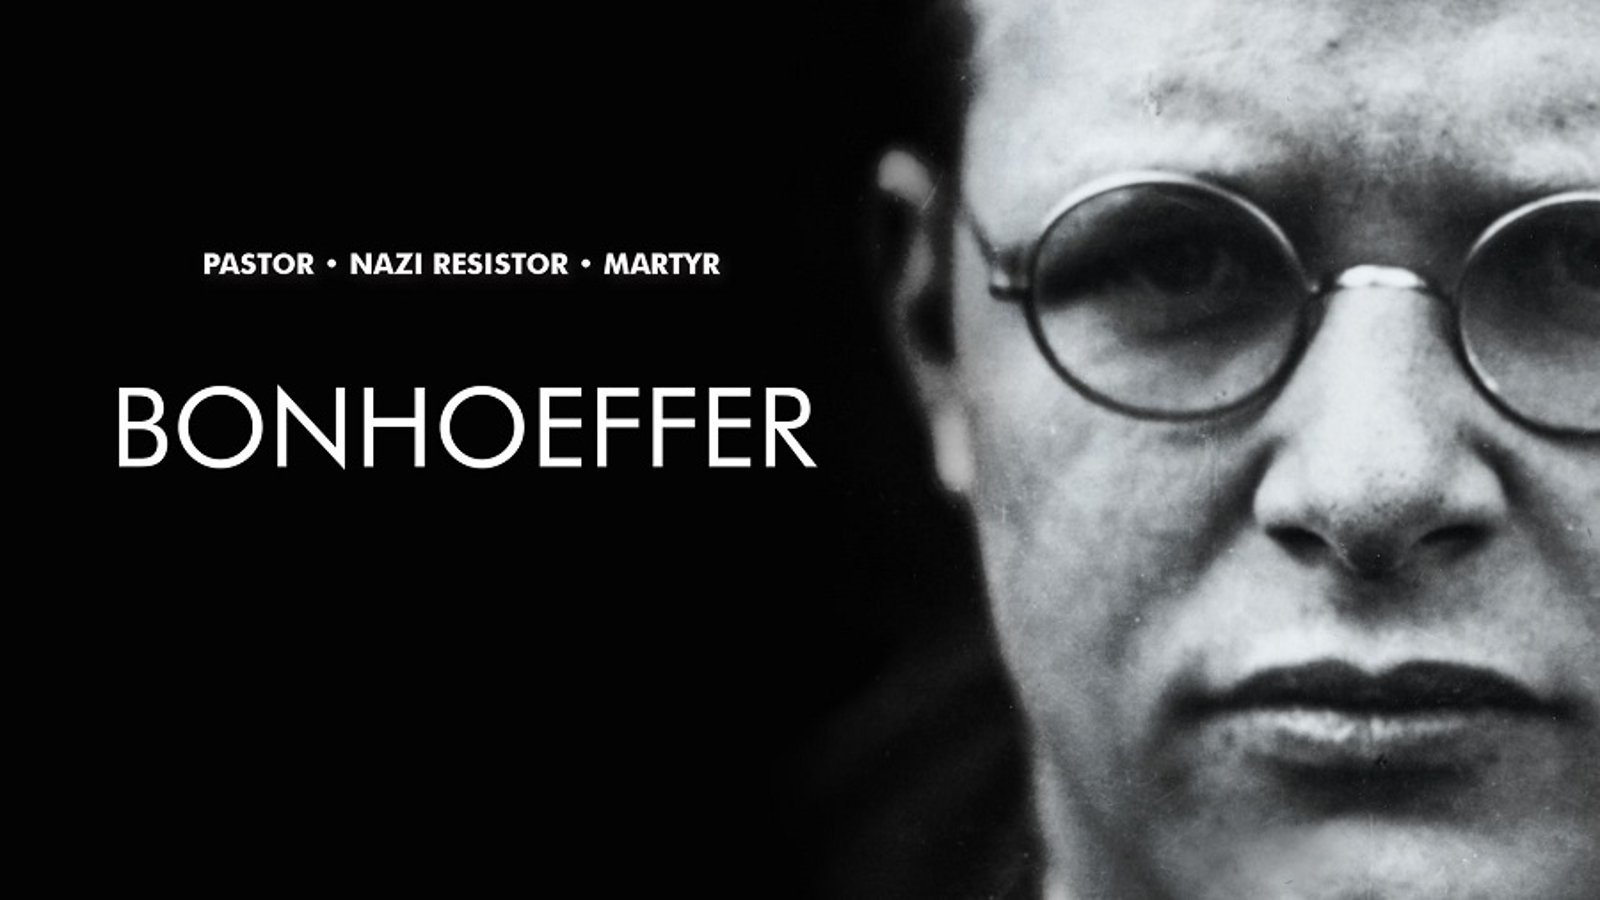 Bonhoeffer - An Anti-Nazi Dissident